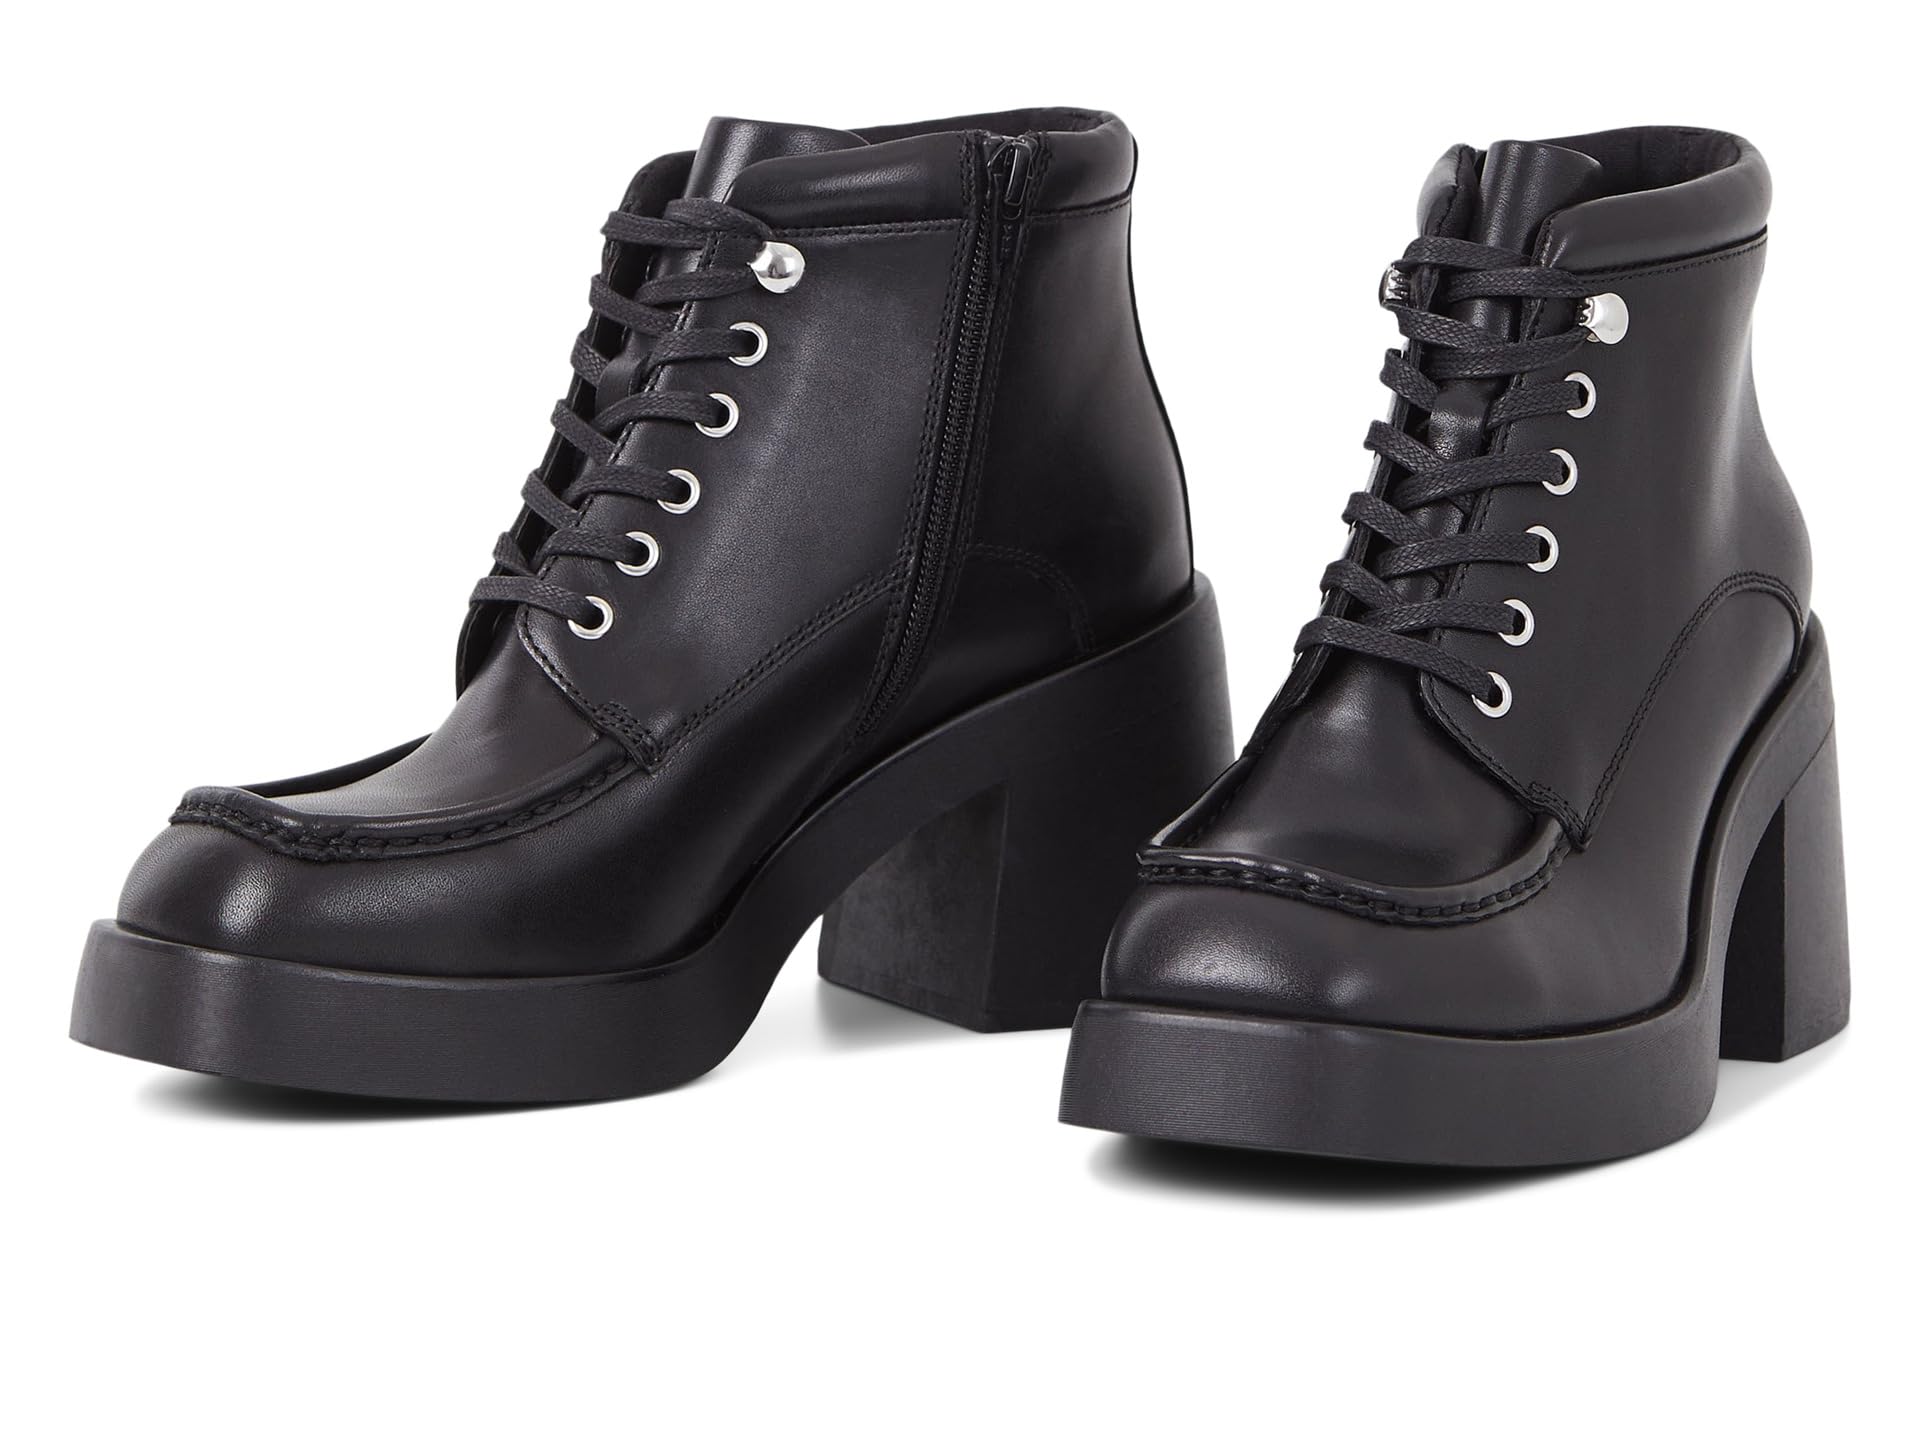 Ботинки Vagabond Shoemakers Brooke Leather Lace-Up Bootie, черный цена и фото